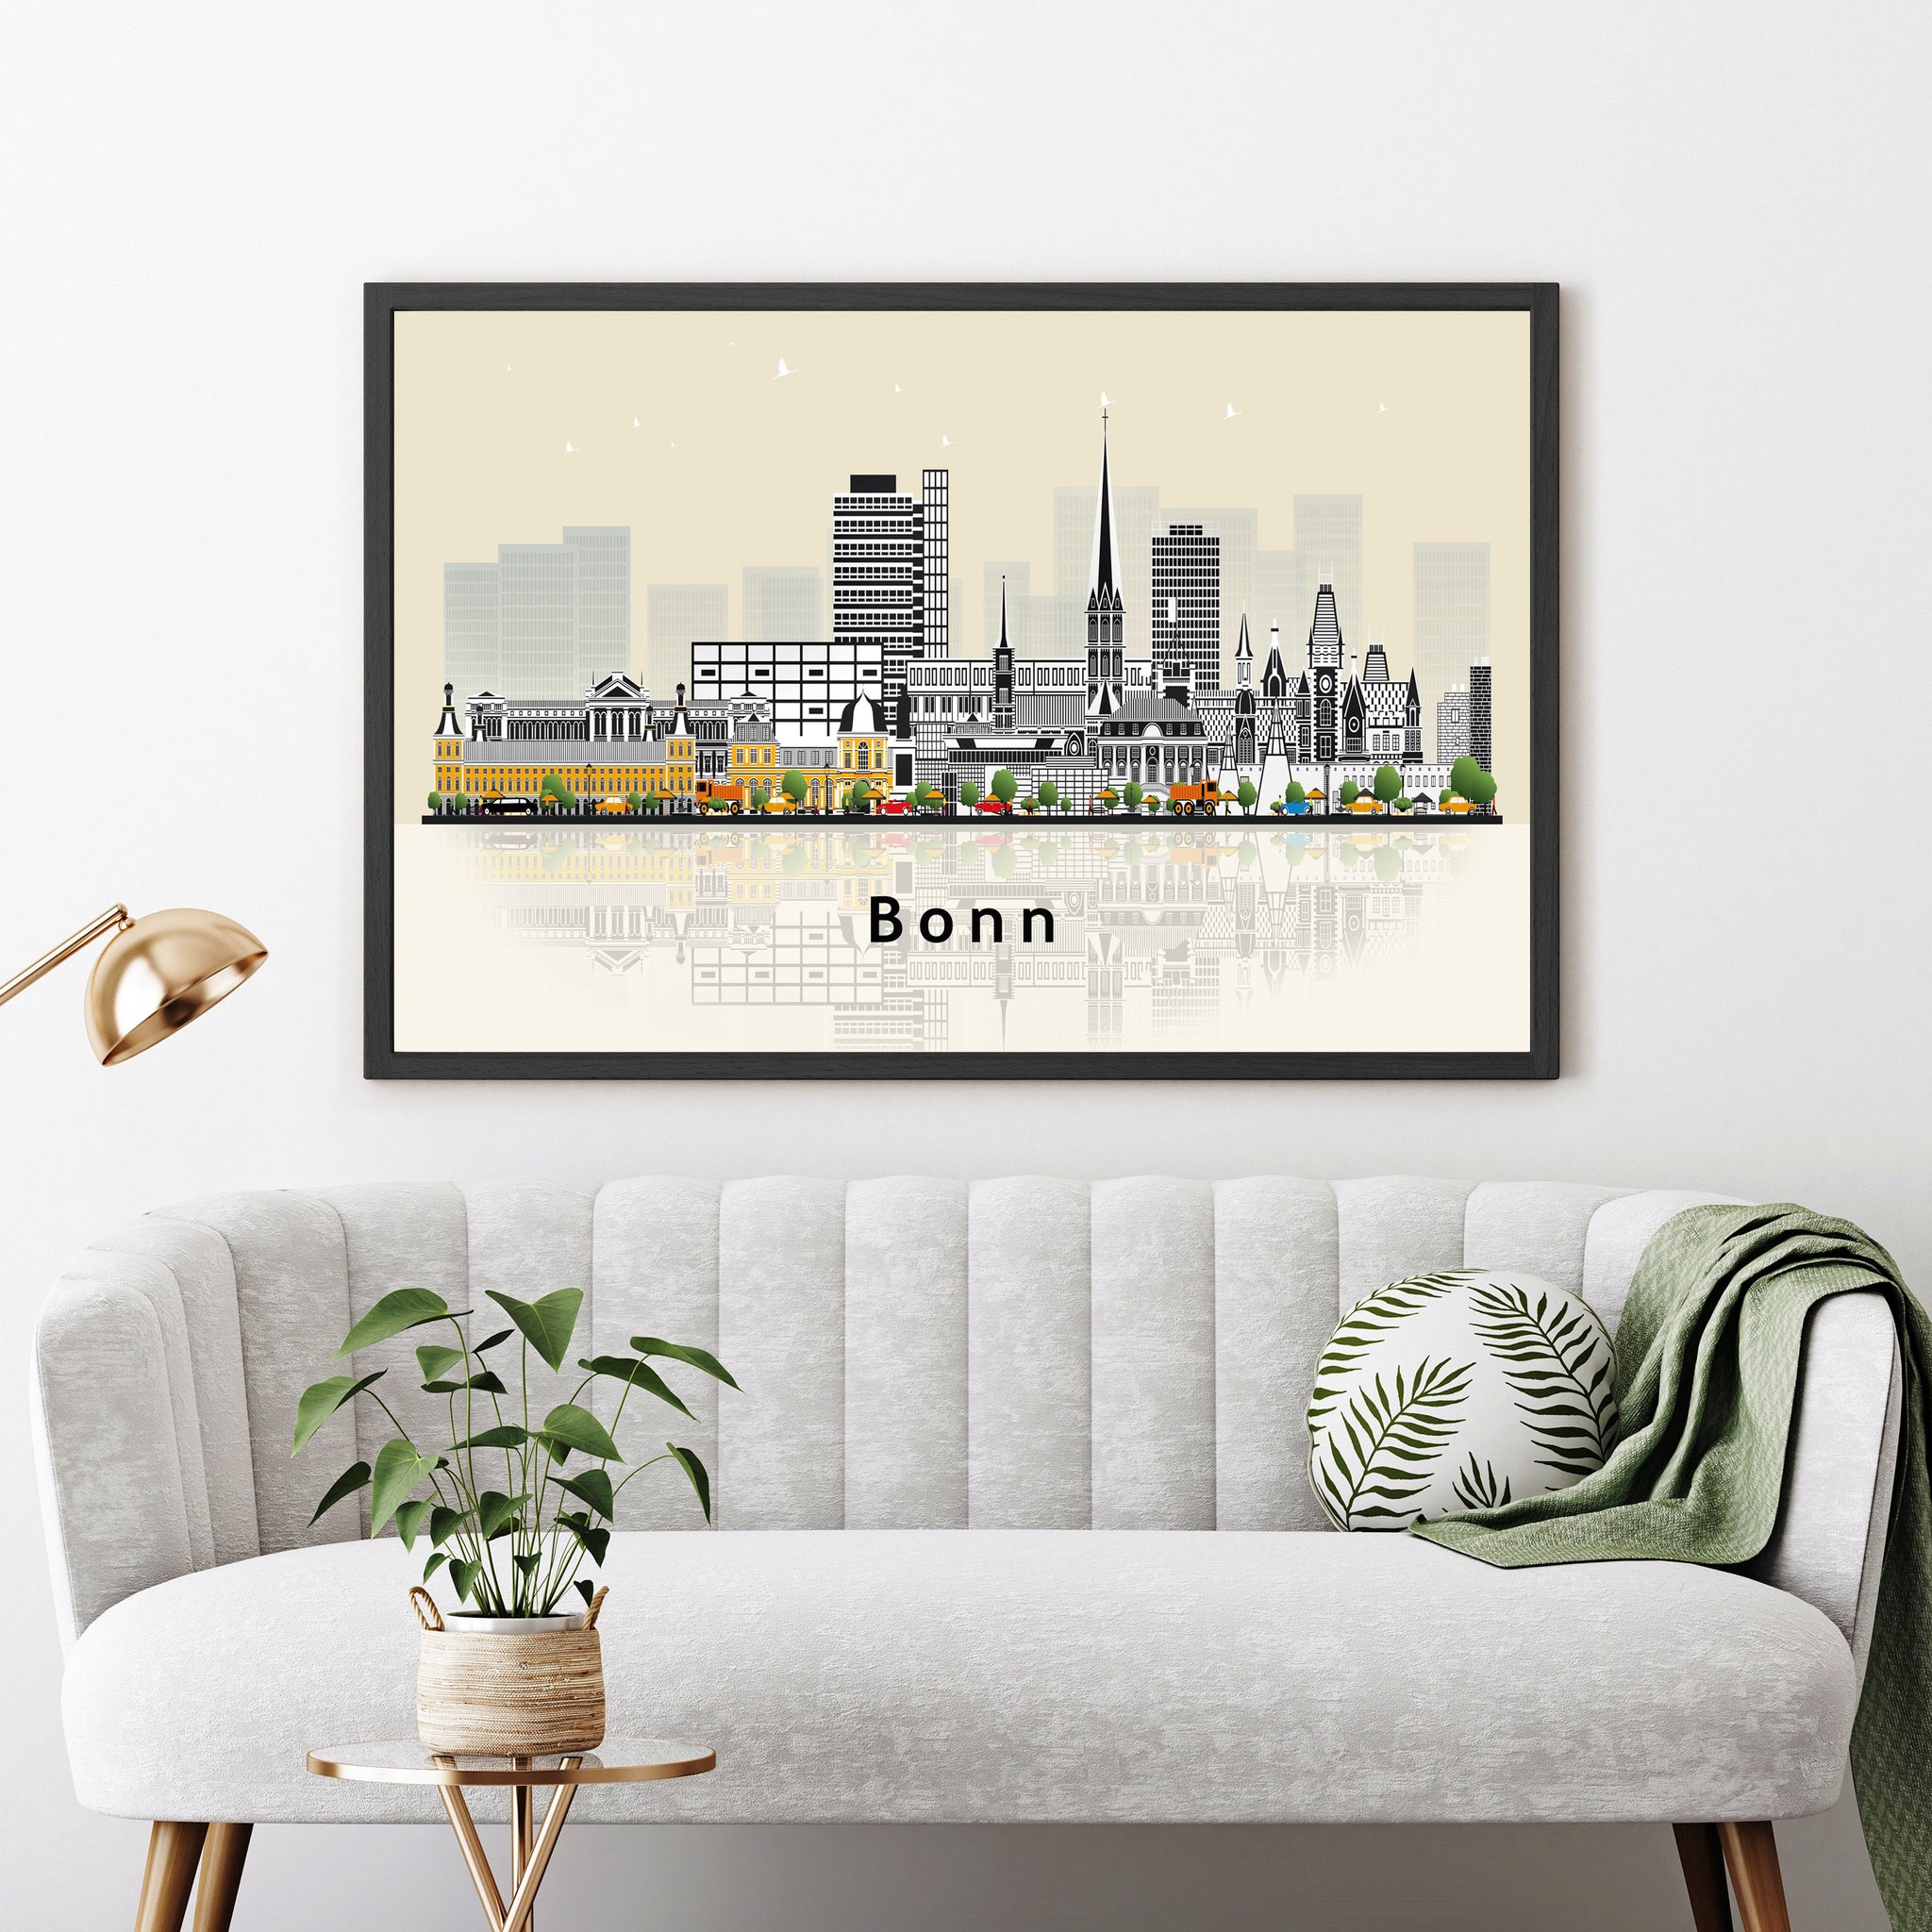 BONN GERMANY Illustration skyline poster, Bonn modern skyline cityscape poster print, Germany landmark map poster, Home wall decoration